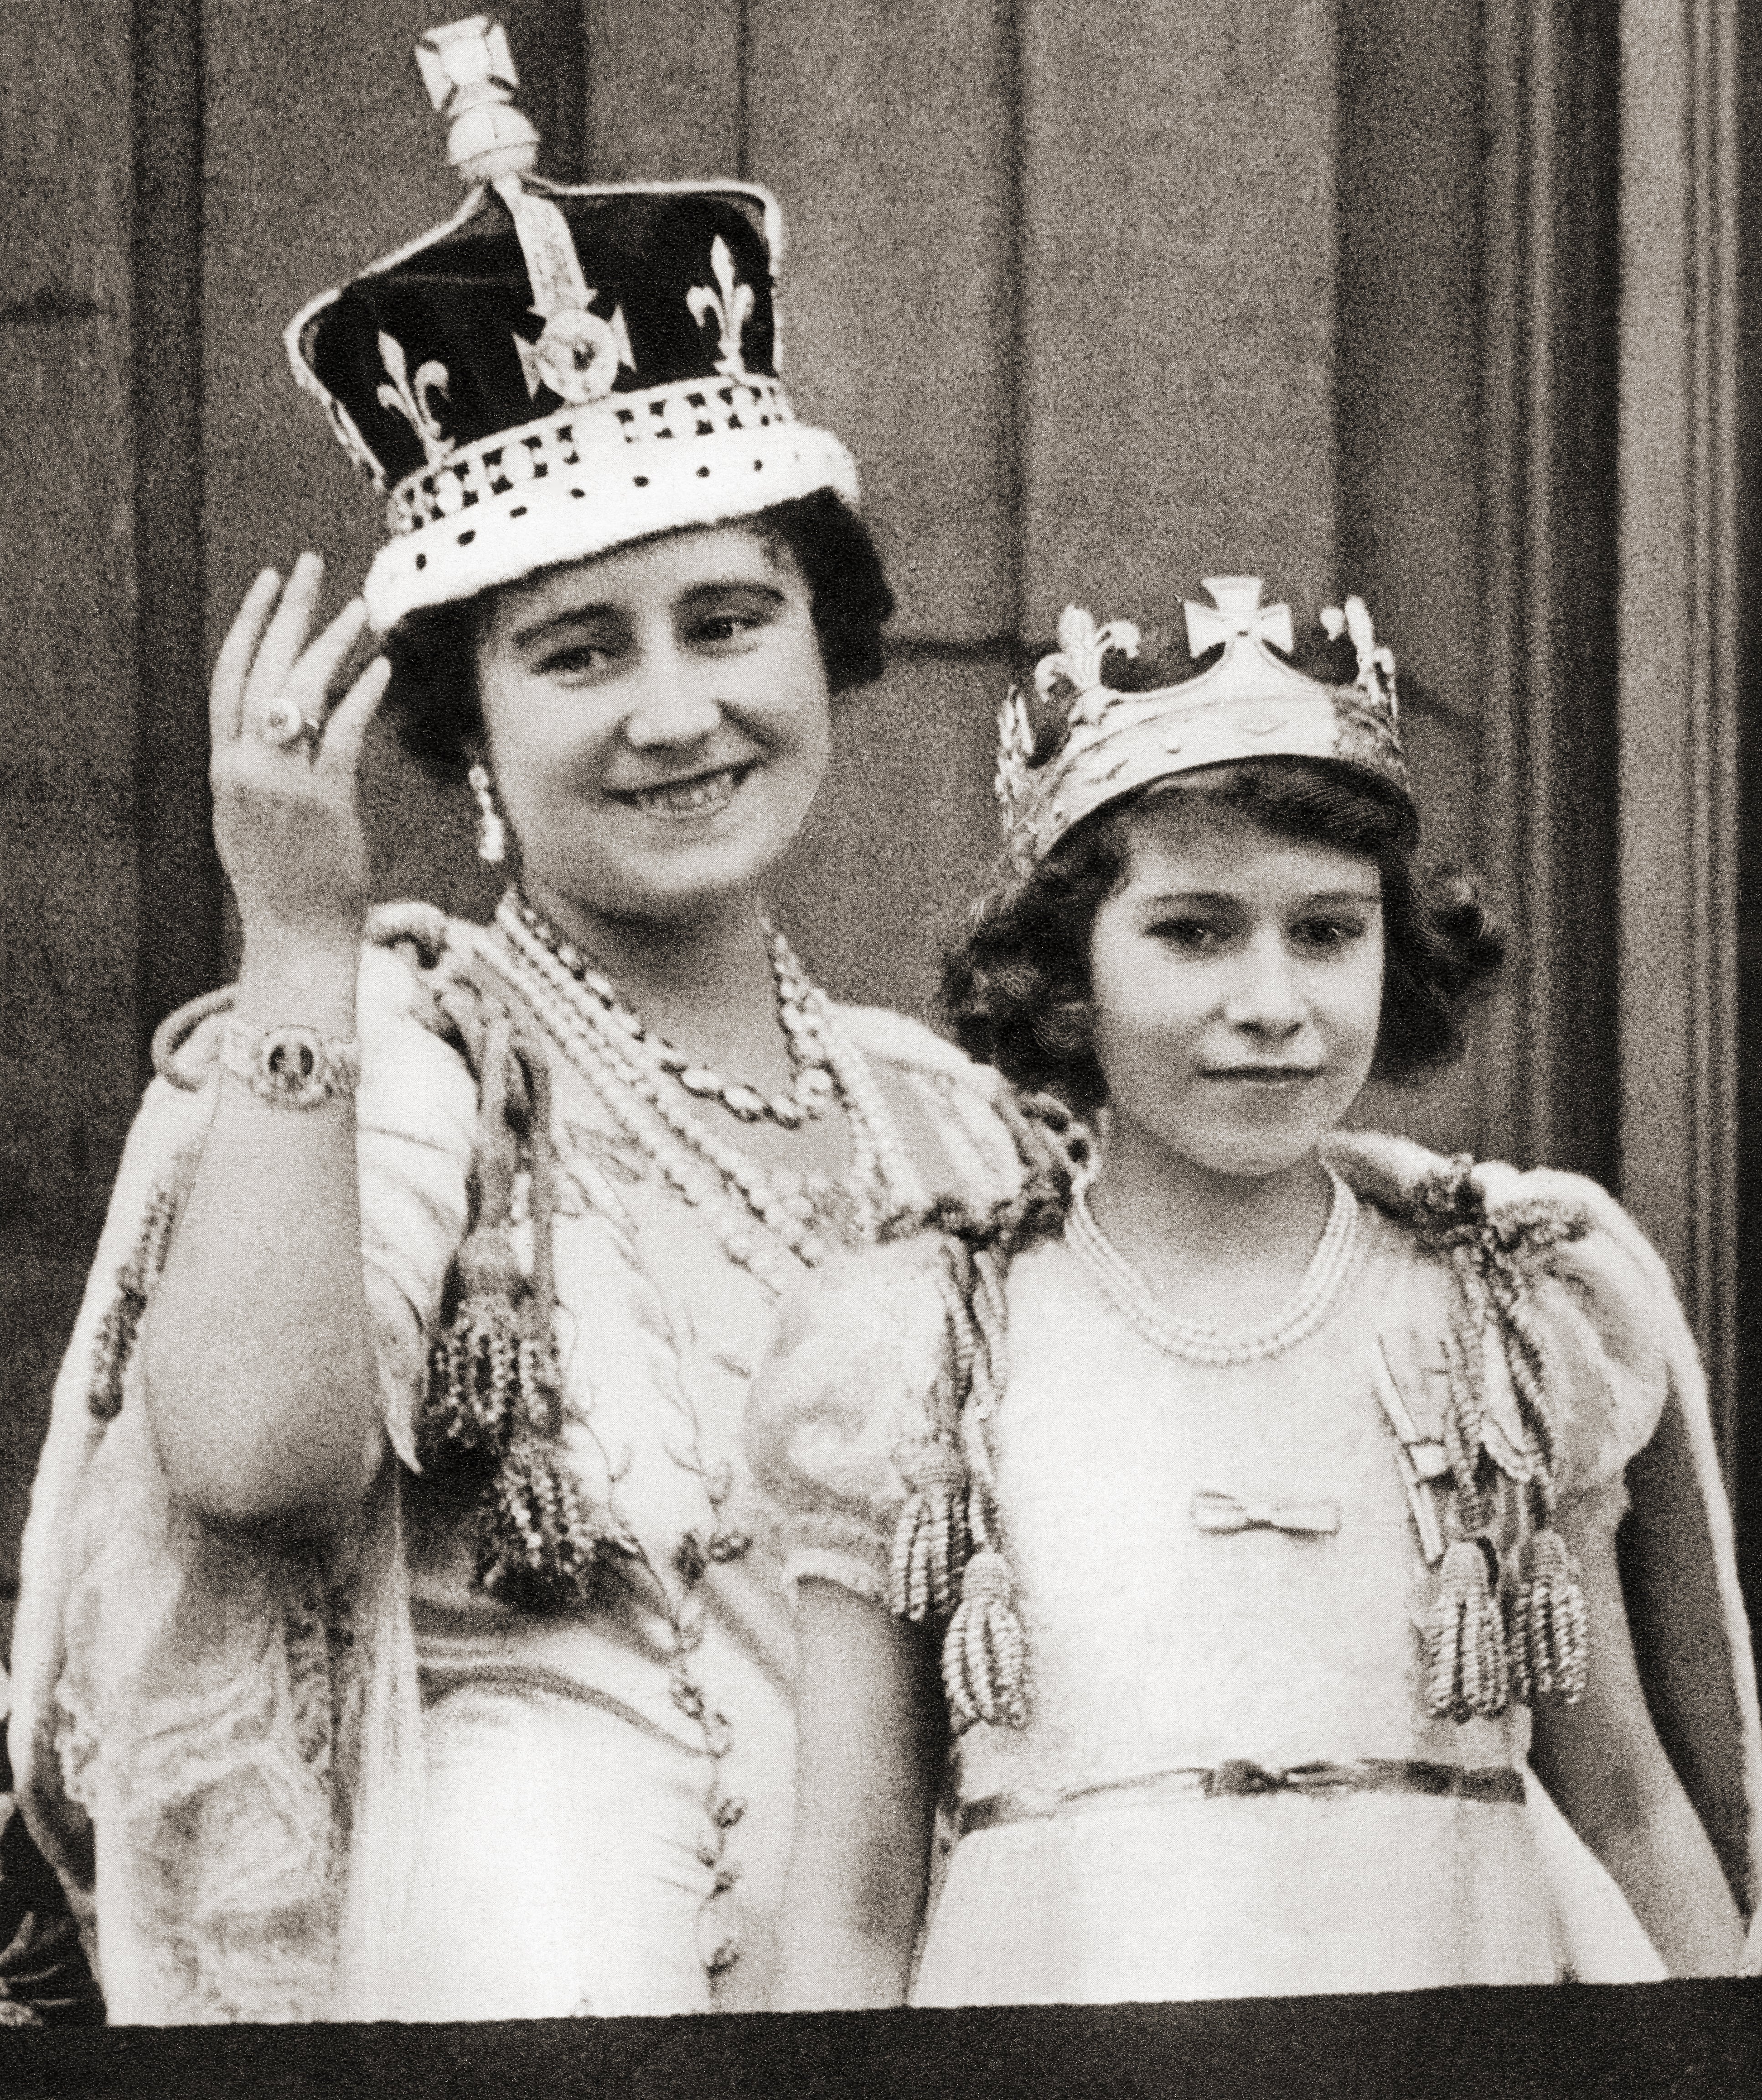 Queen Camilla's Coronation Crown Has a Controversial History Behind It